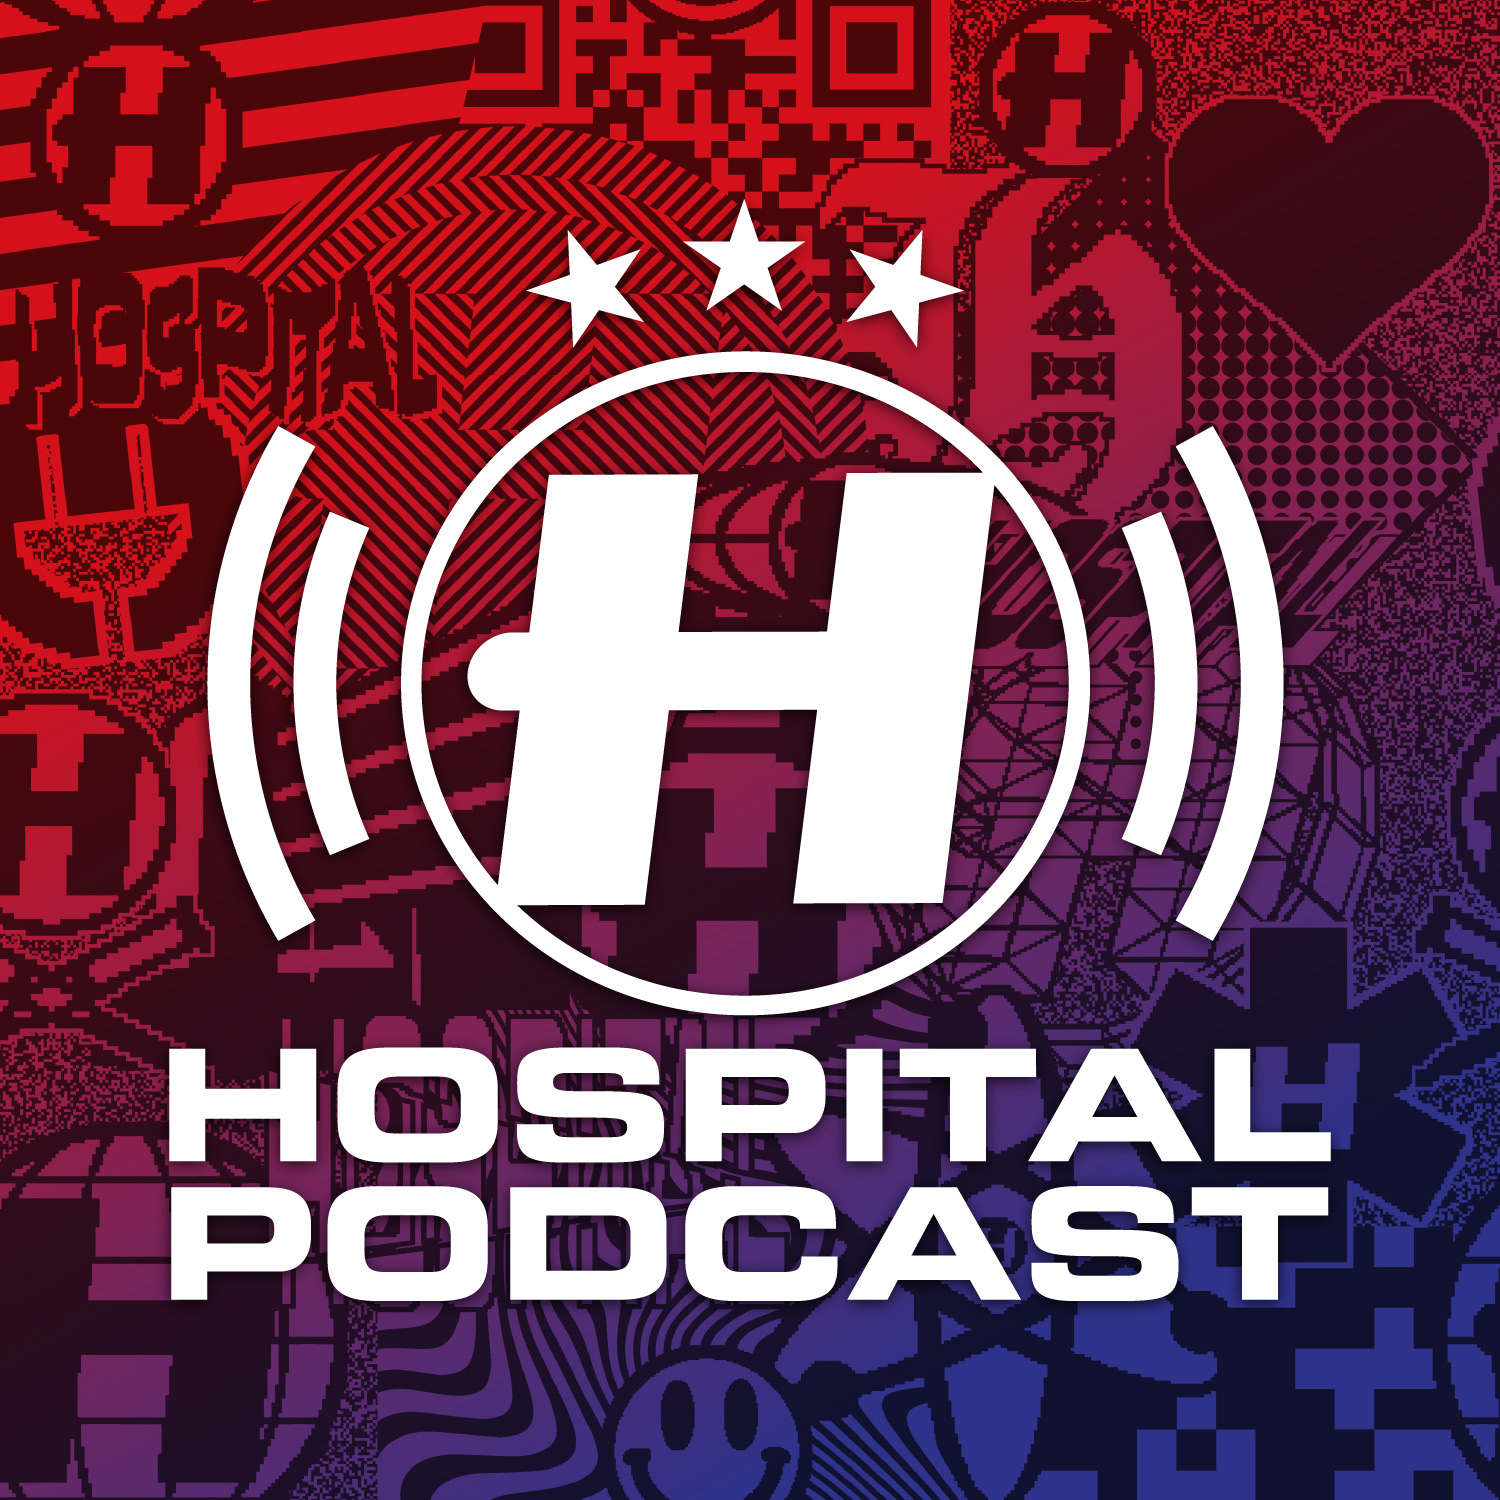 Hospital Podcast 412 with London Elektricity Artwork